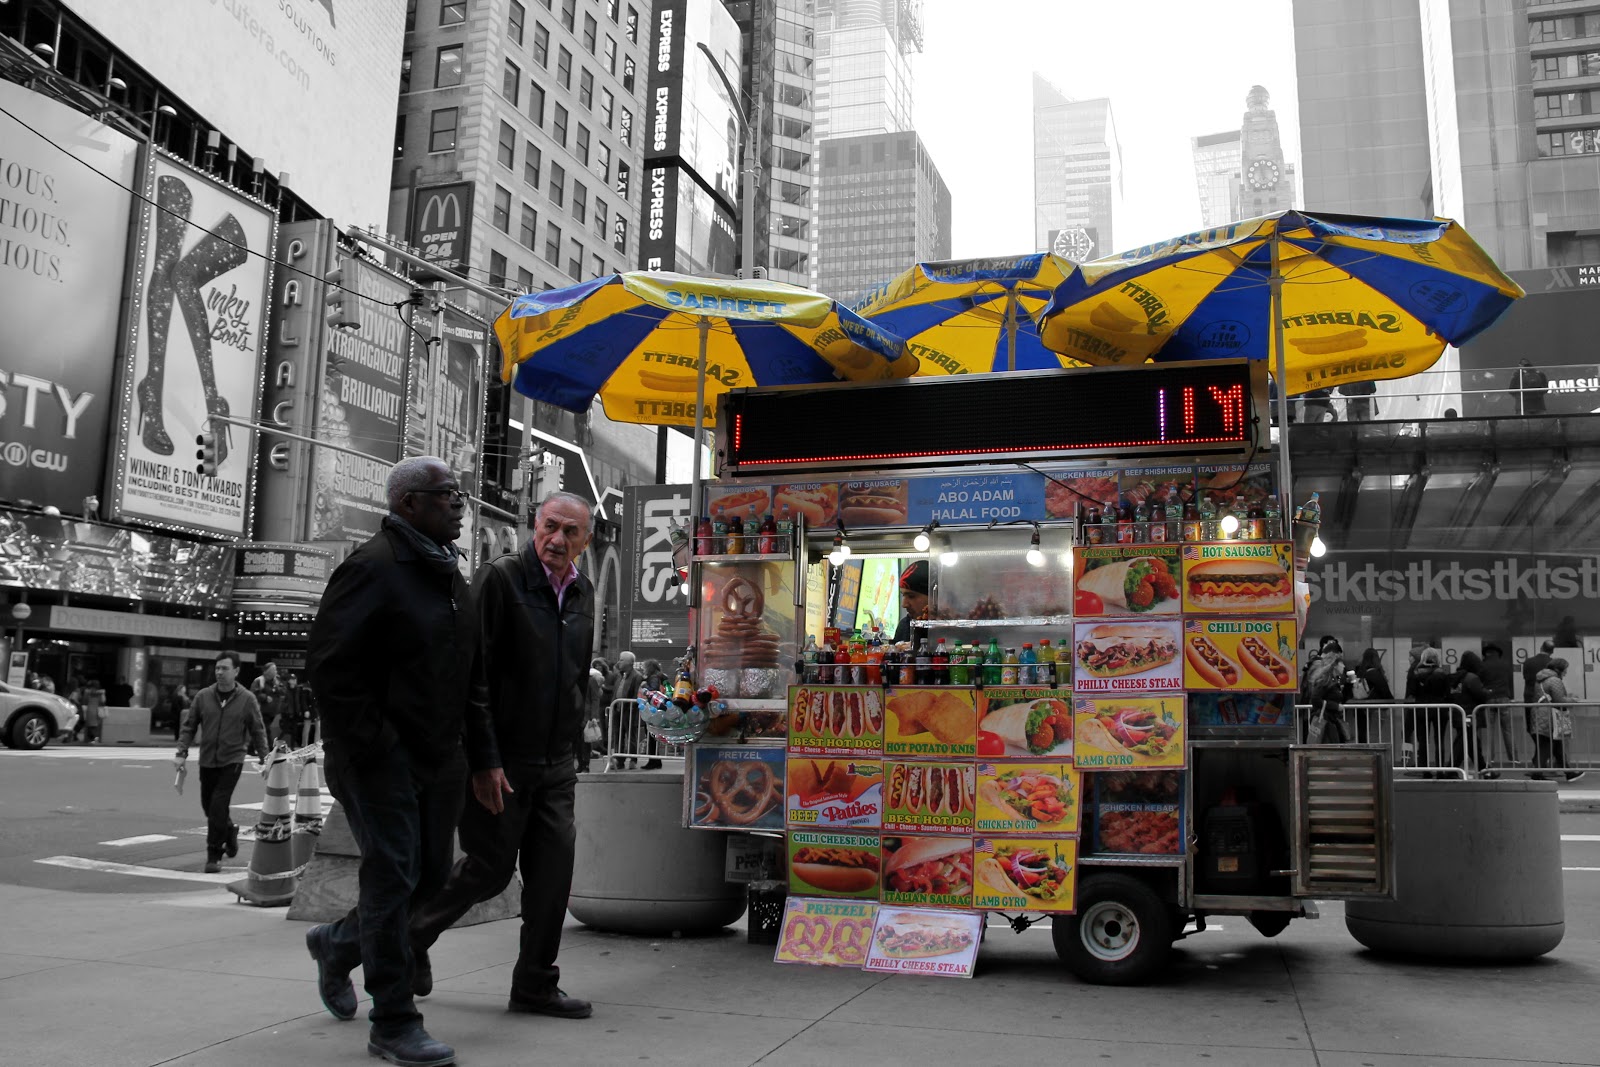 mitcheci photos: New York: Times Square Street Food